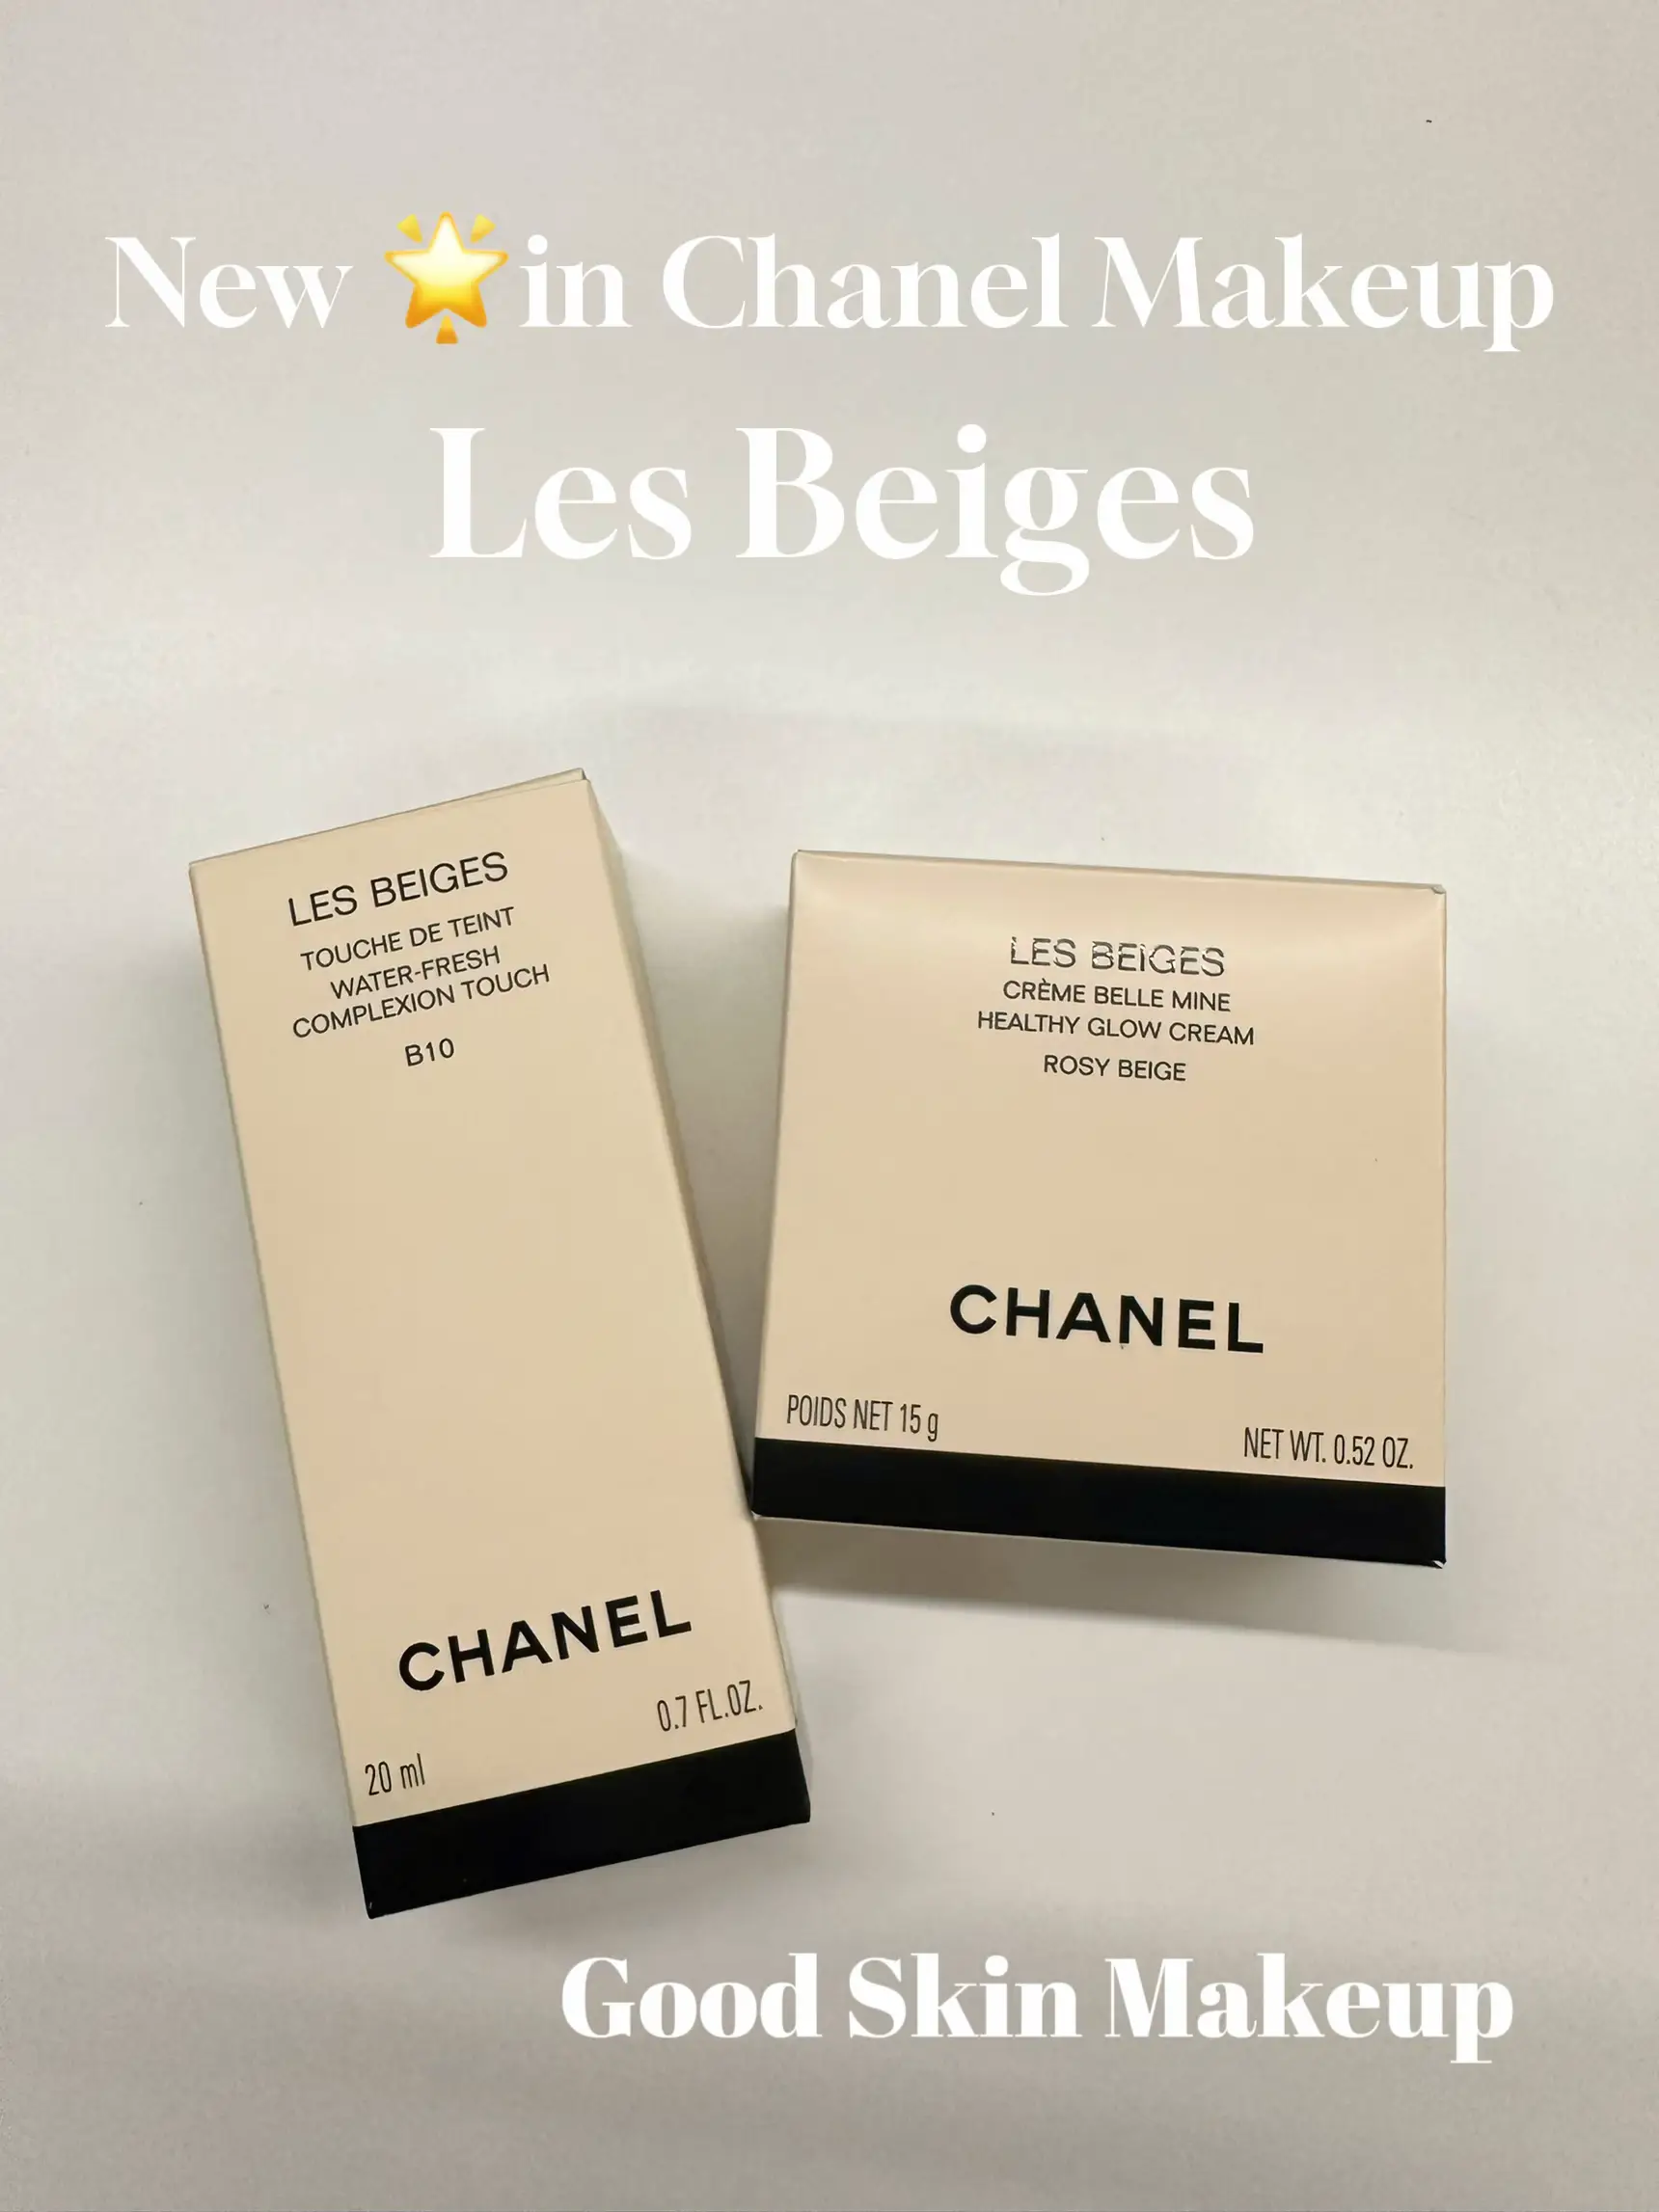 Chanel Les Beiges Water Fresh Complexion Touch - B10 , 0.7 oz Makeup 